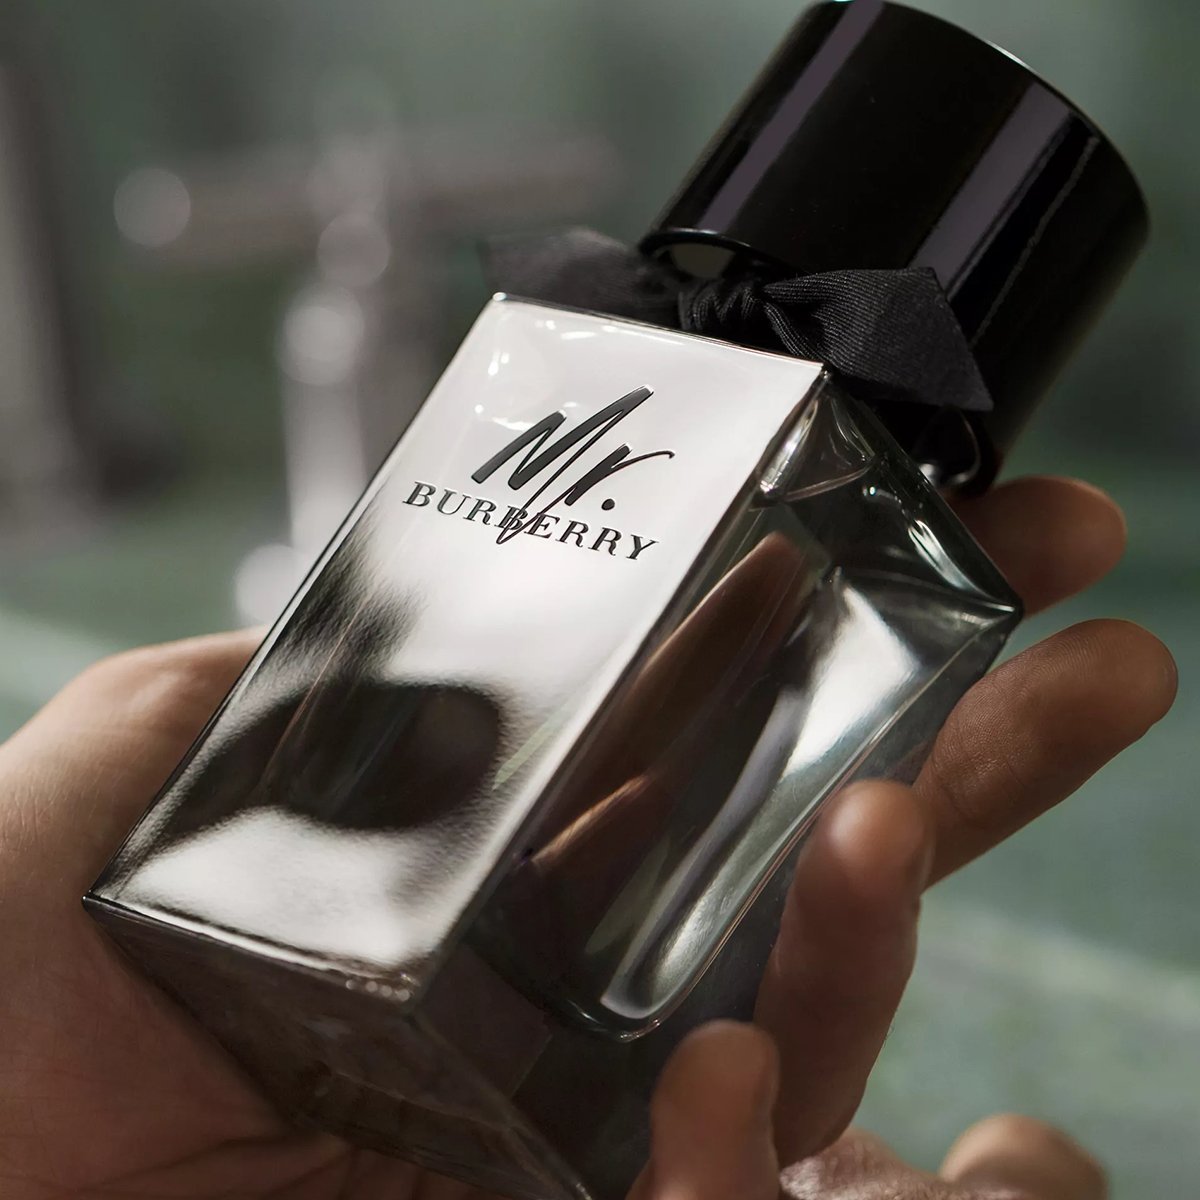 Burberry Mr. Burberry EDT - My Perfume Shop Australia